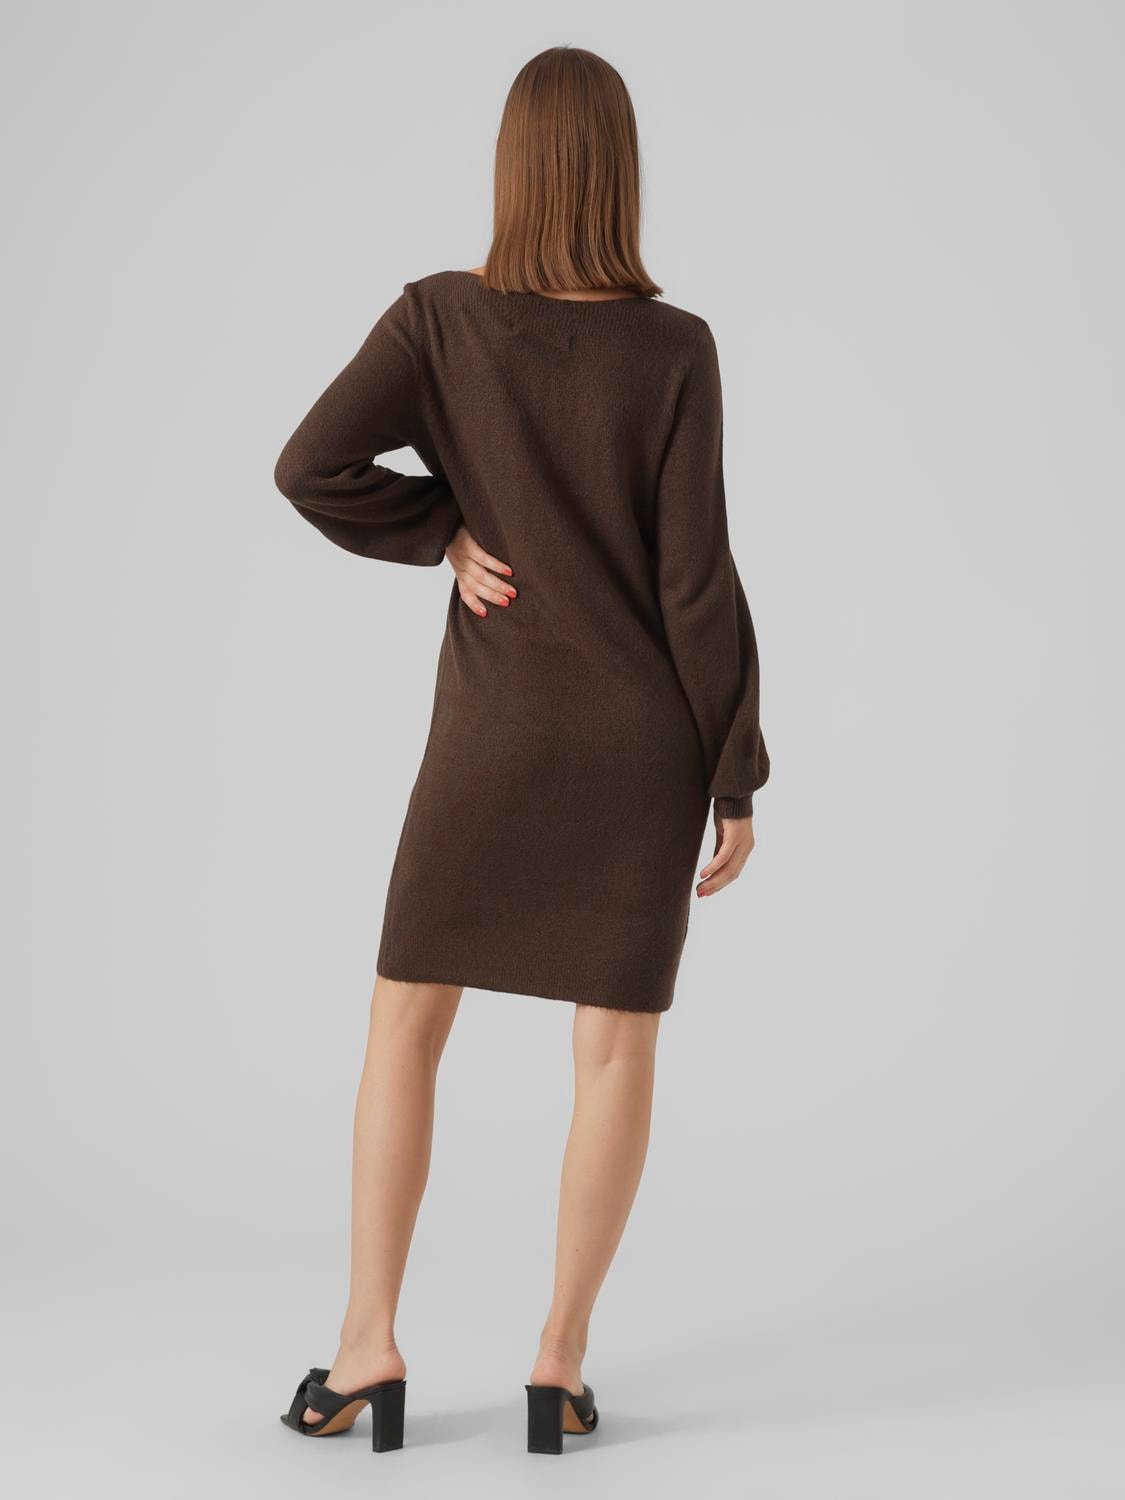 Vero Moda VMLEFILE Short dress -Chocolate Brown - 10296805